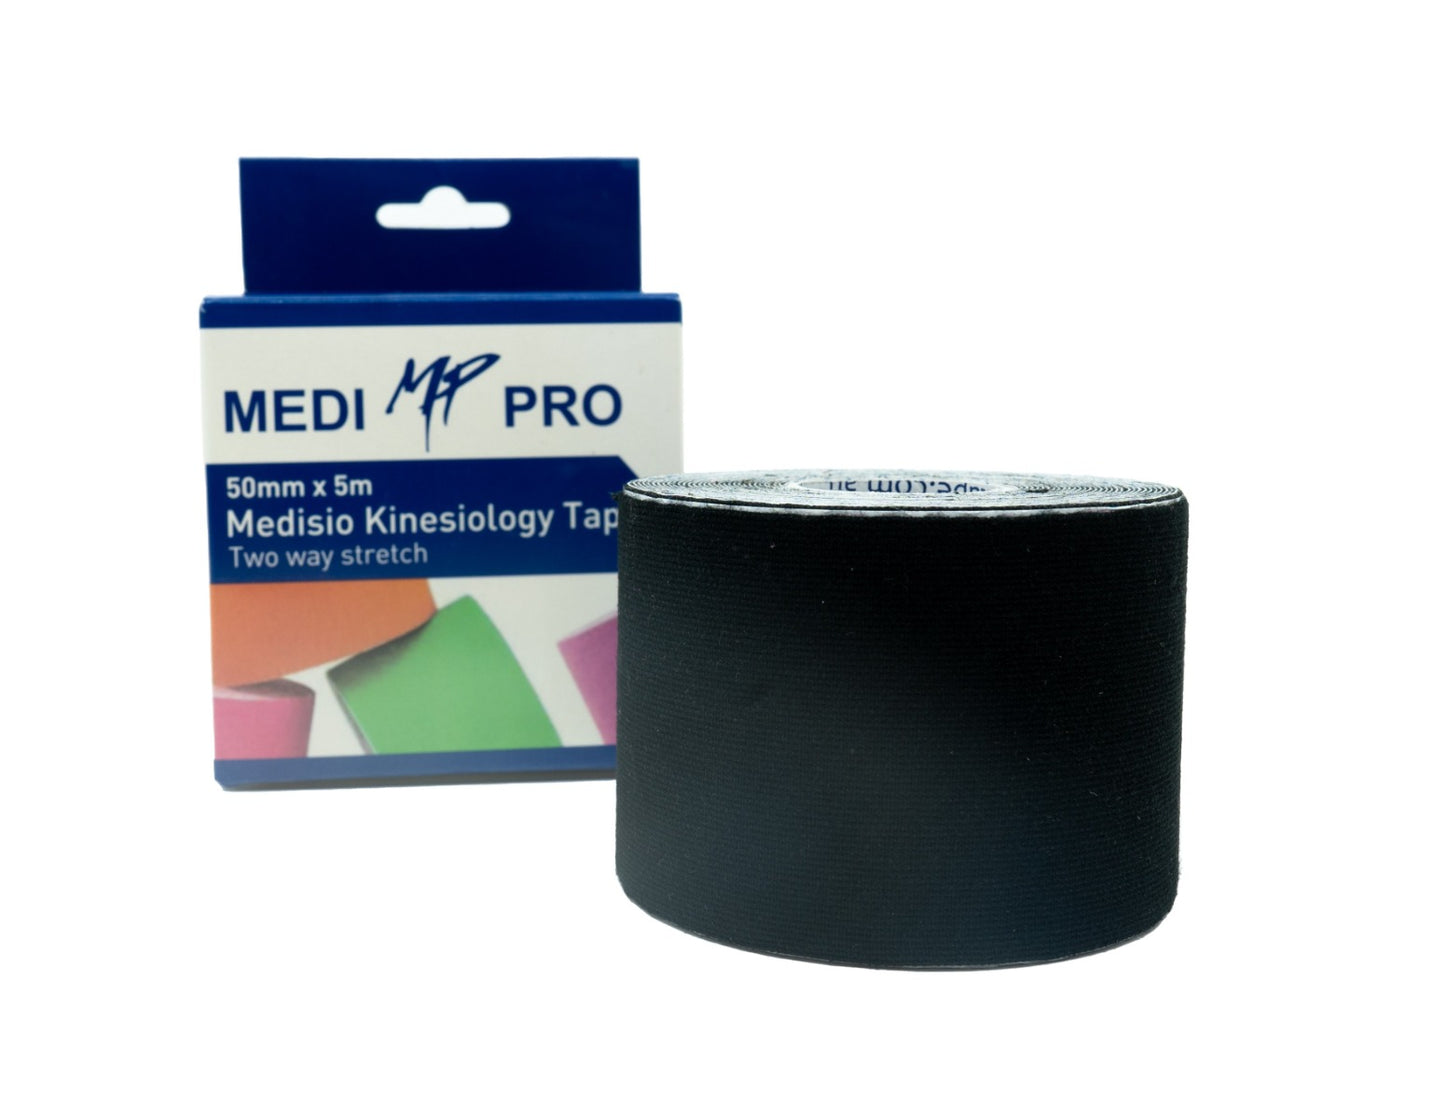 Medisio K-Tape 50mm x 5m 2 way Stretch MediPro Sports Tape